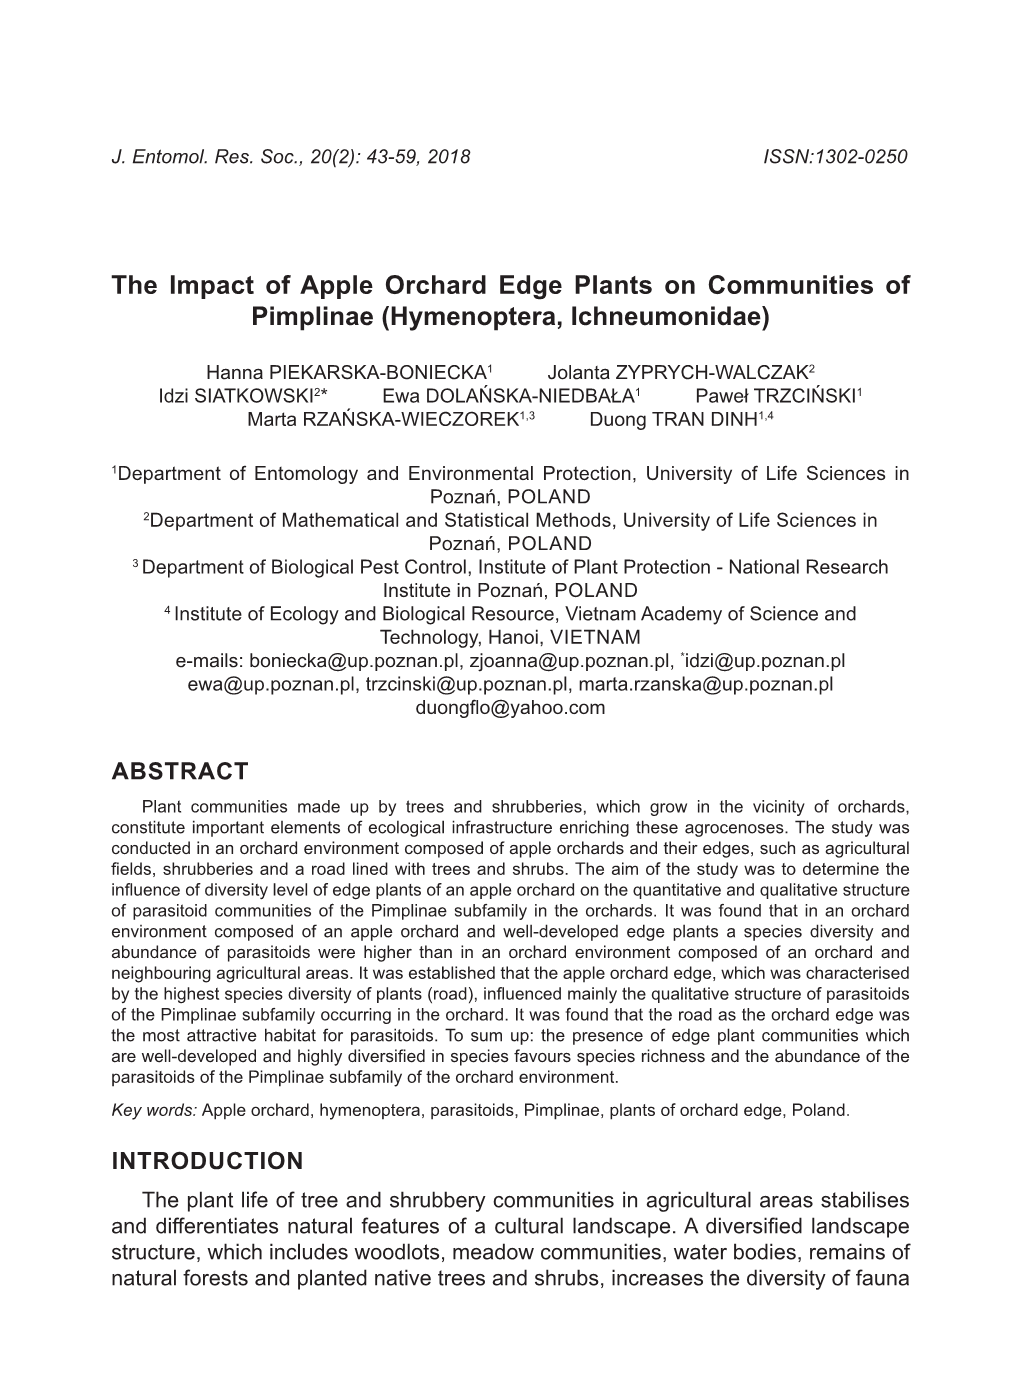 The Impact of Apple Orchard Edge Plants on Communities of Pimplinae (Hymenoptera, Ichneumonidae)